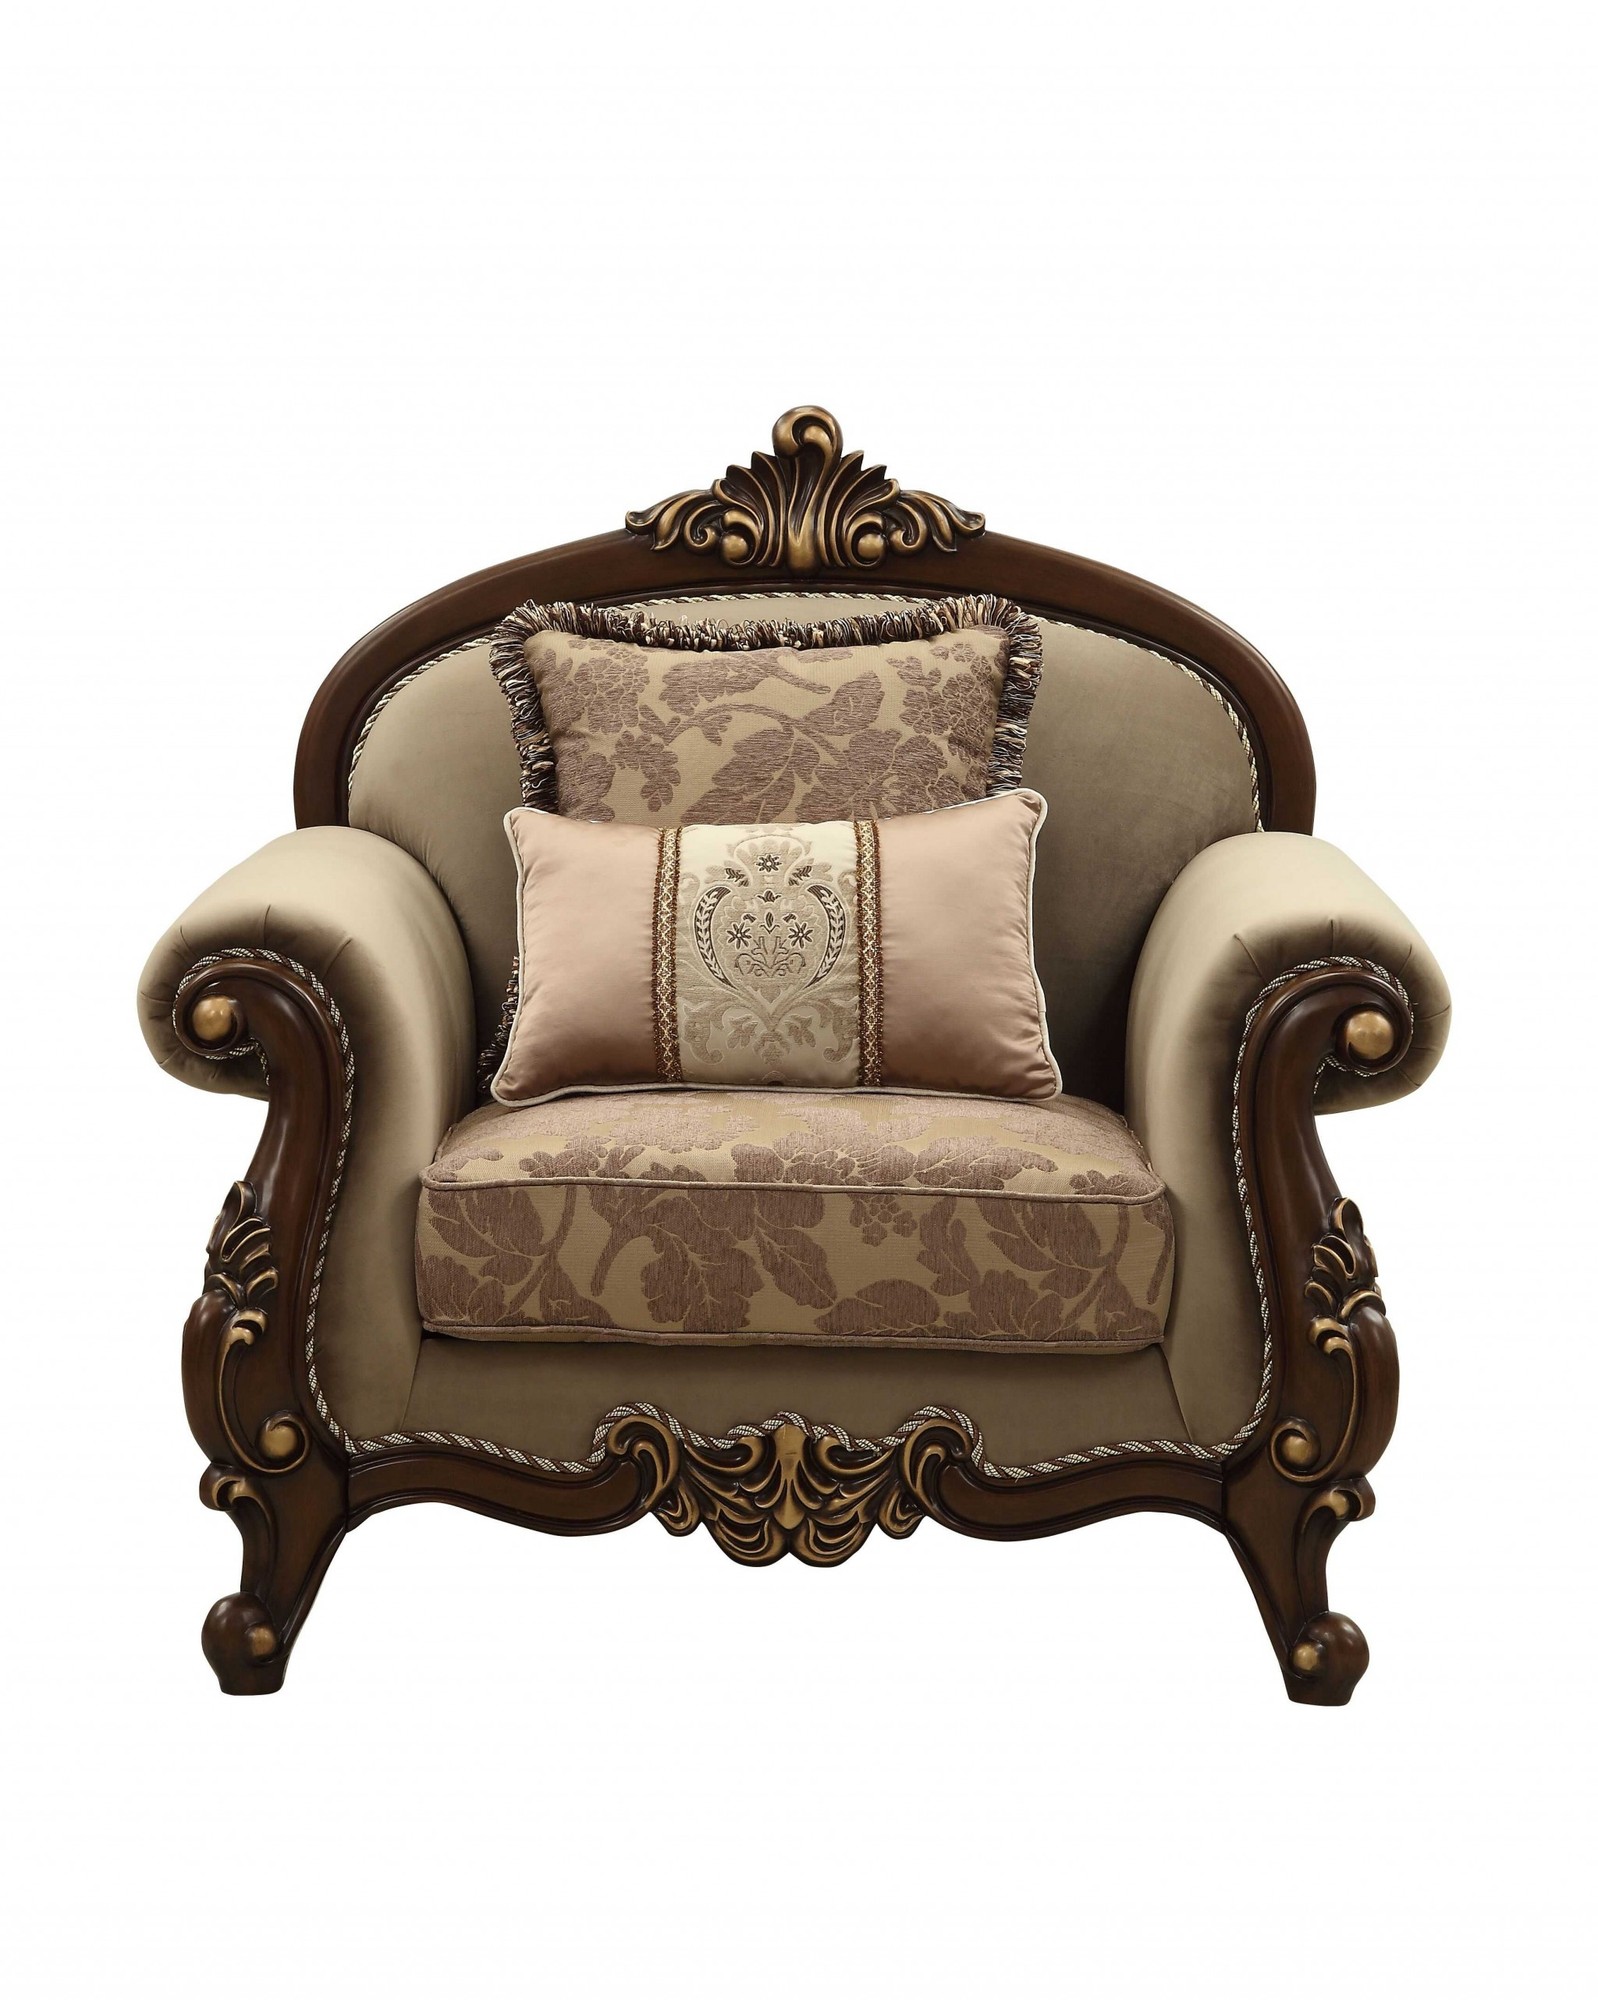 38" X 49" X 45" Fabric Walnut Upholstery Wood Leg/Trim Chair w/2 Pillows